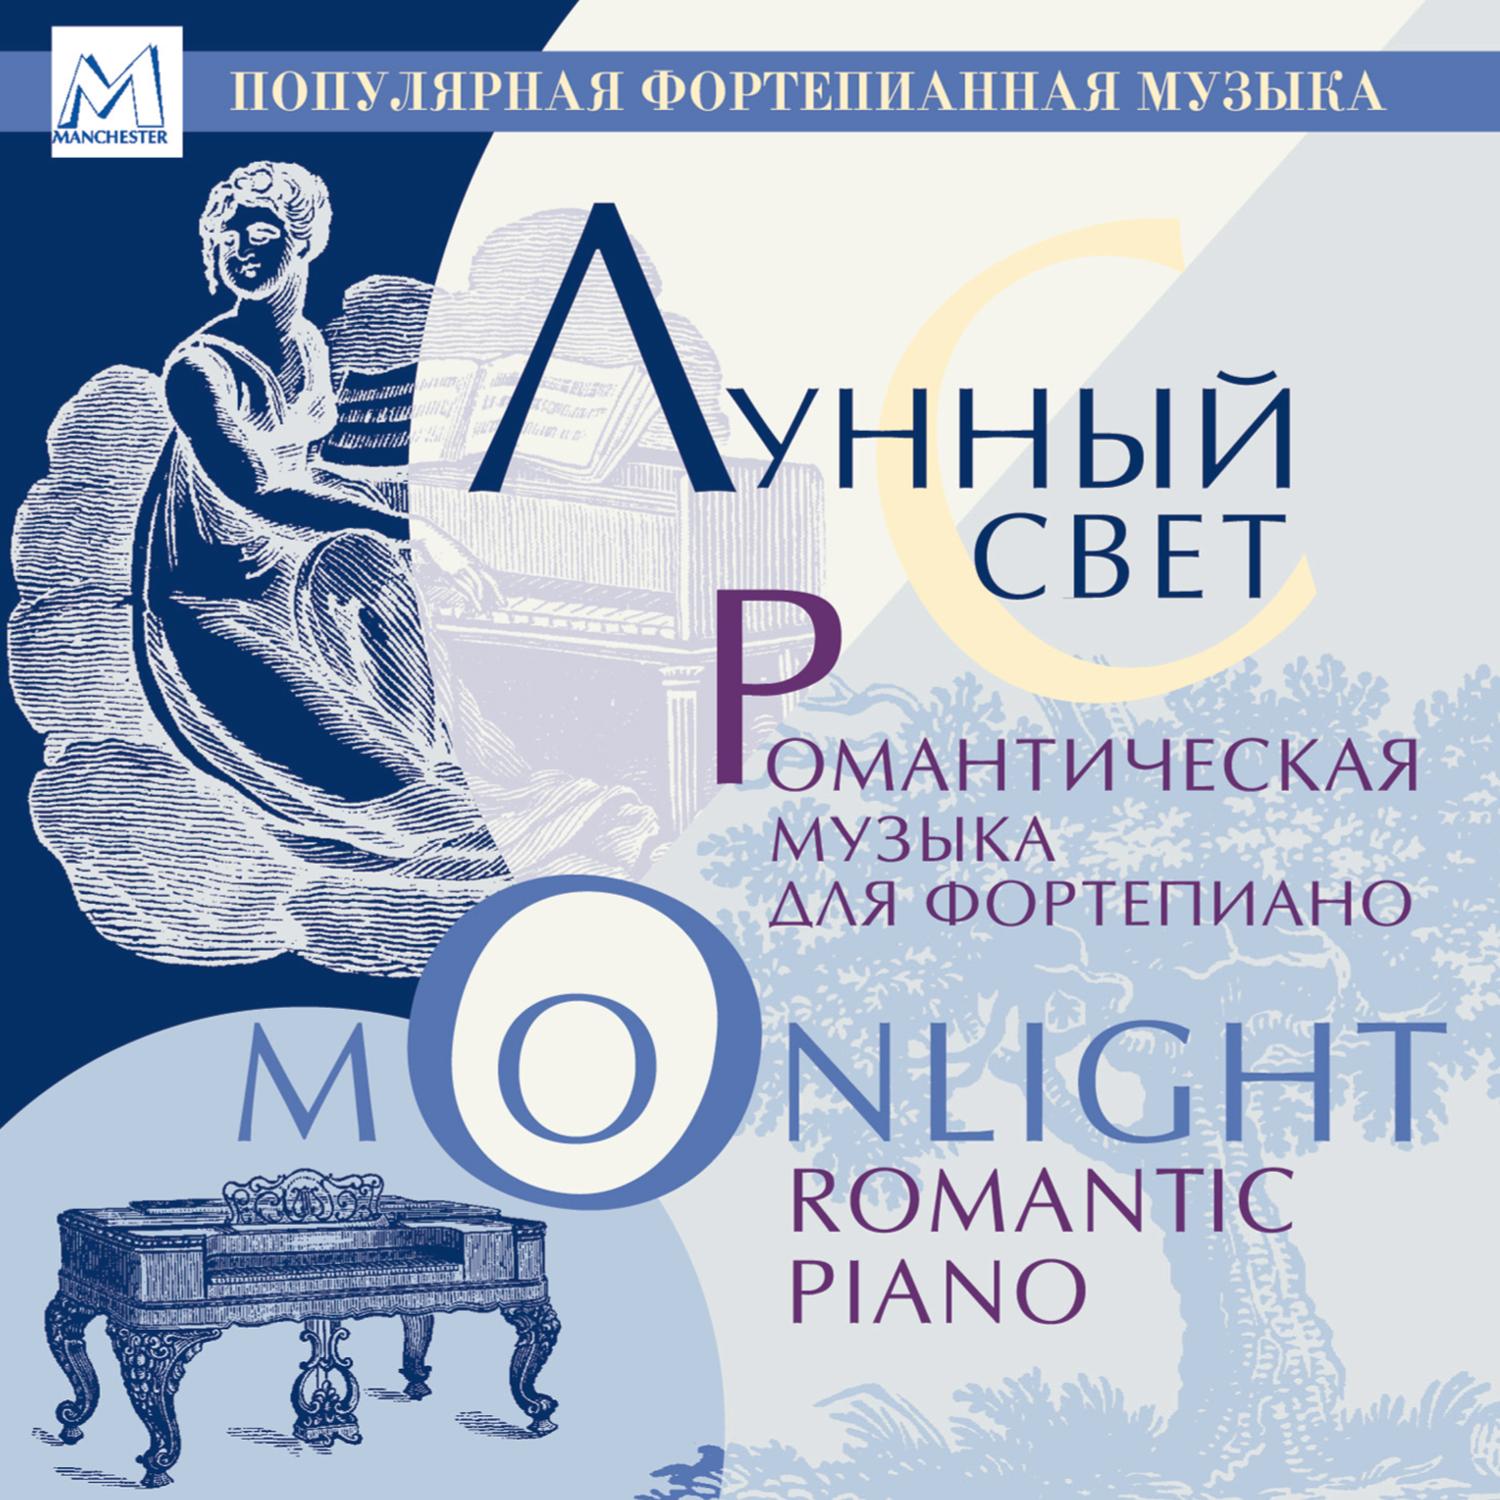 Piano Sonata No. 14 in CSharp Minor, Op. 27 No. 2 " Moonlight": I. Adagio